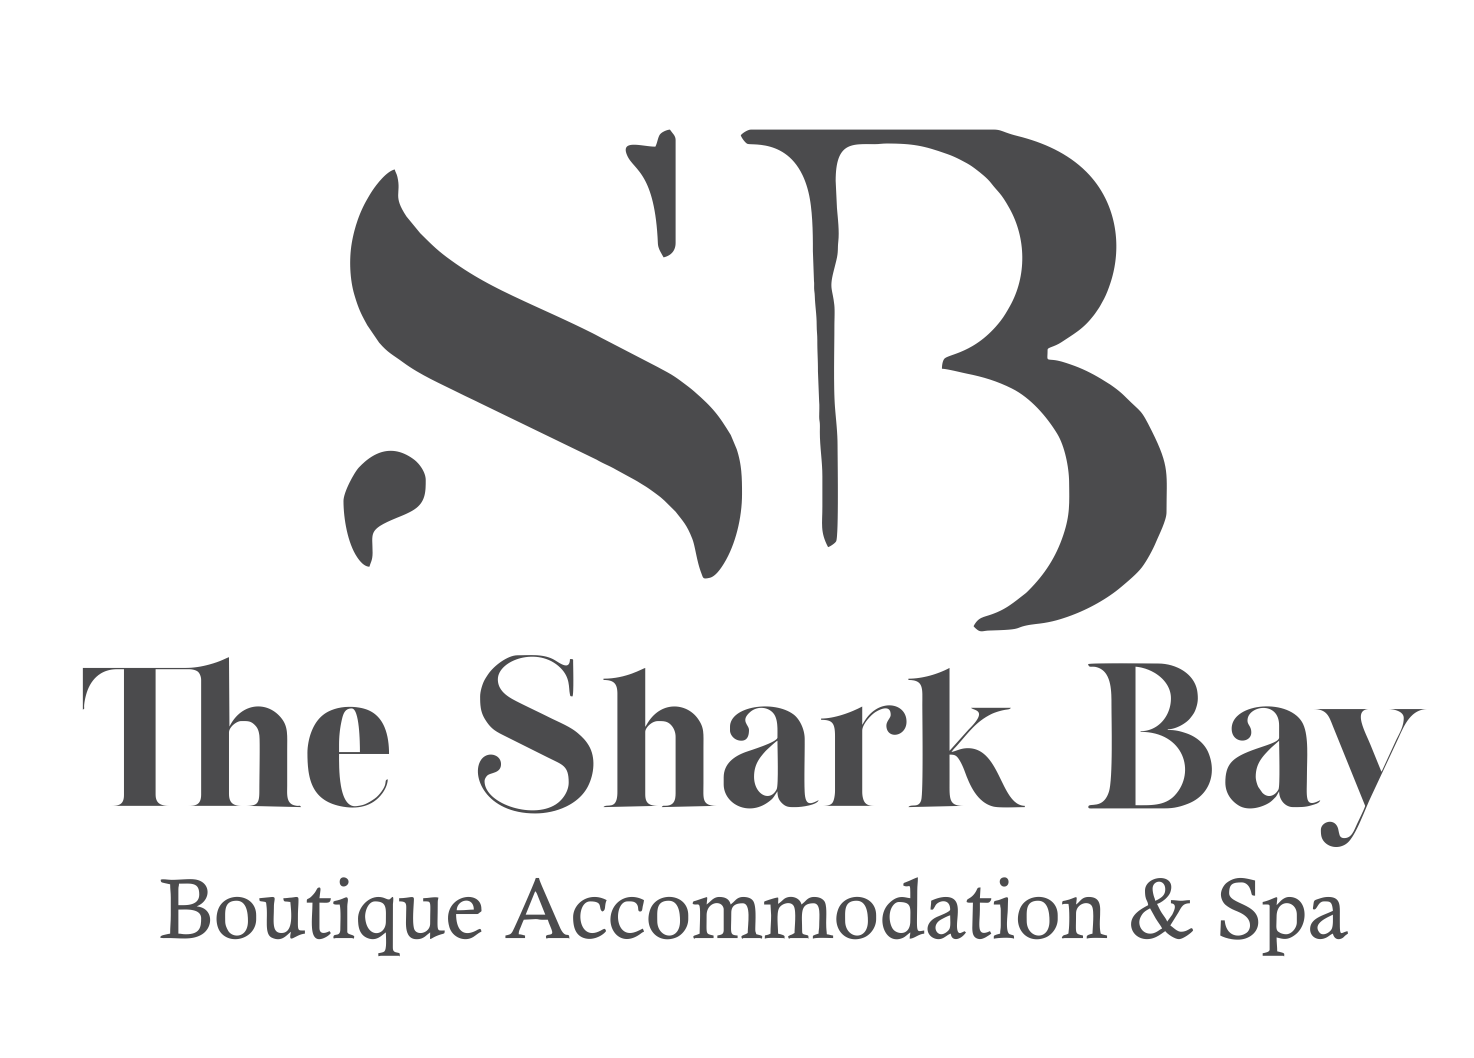 The Shark Bay